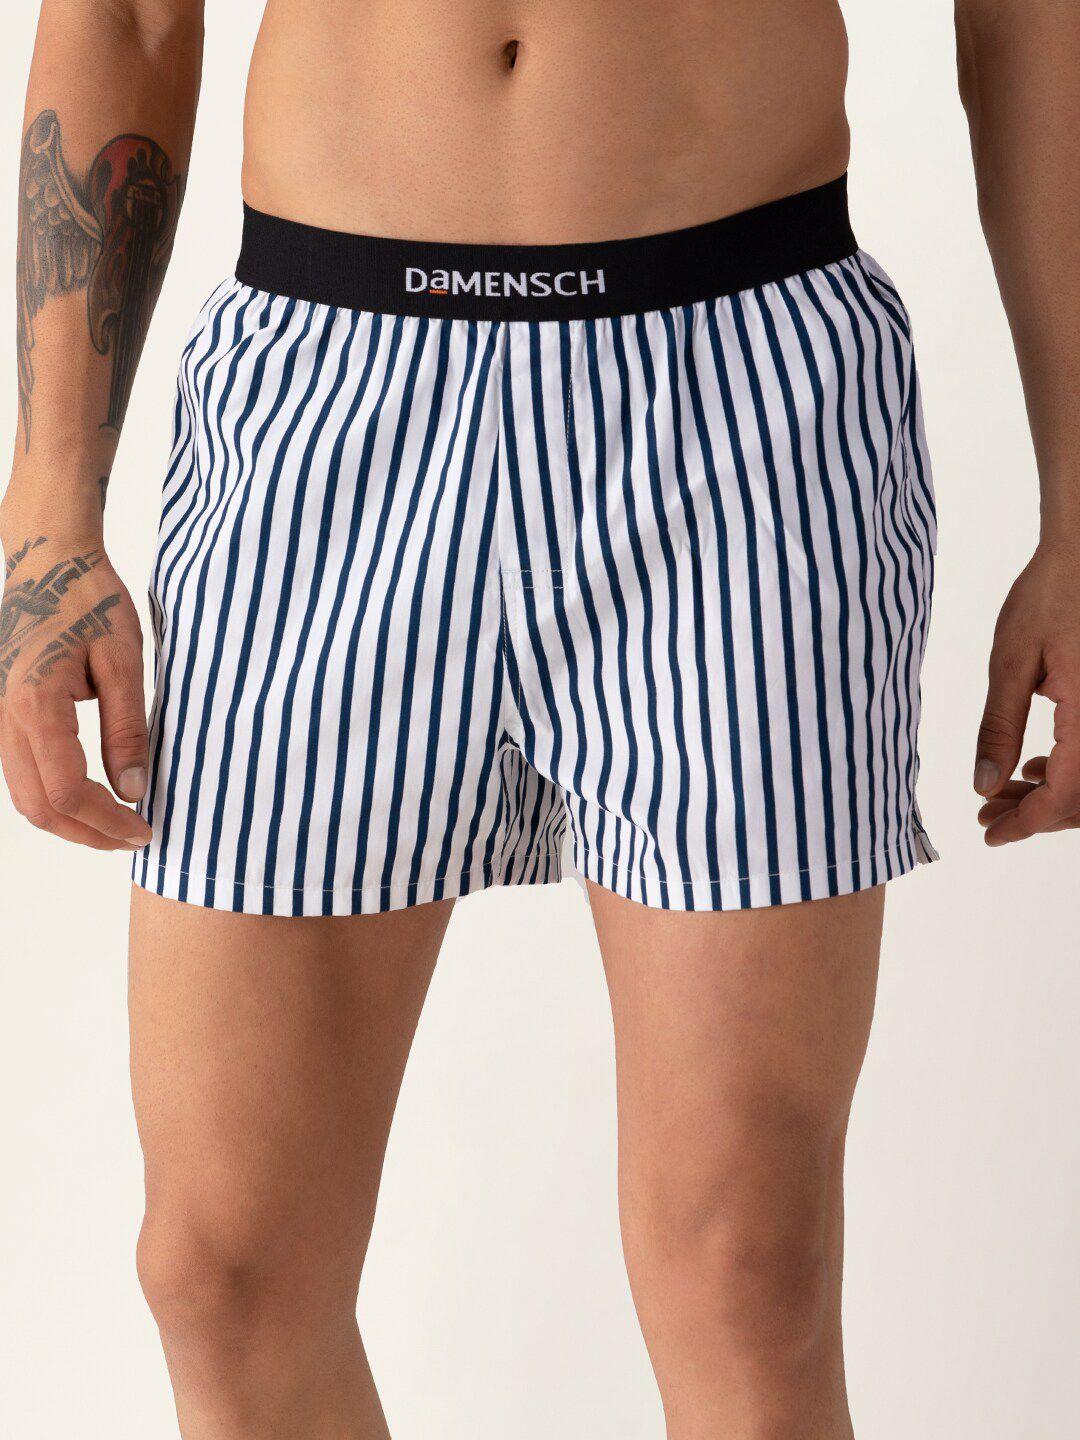 damensch--men-striped-white-ultra-light-cotton-regular-fit-inner-boxer